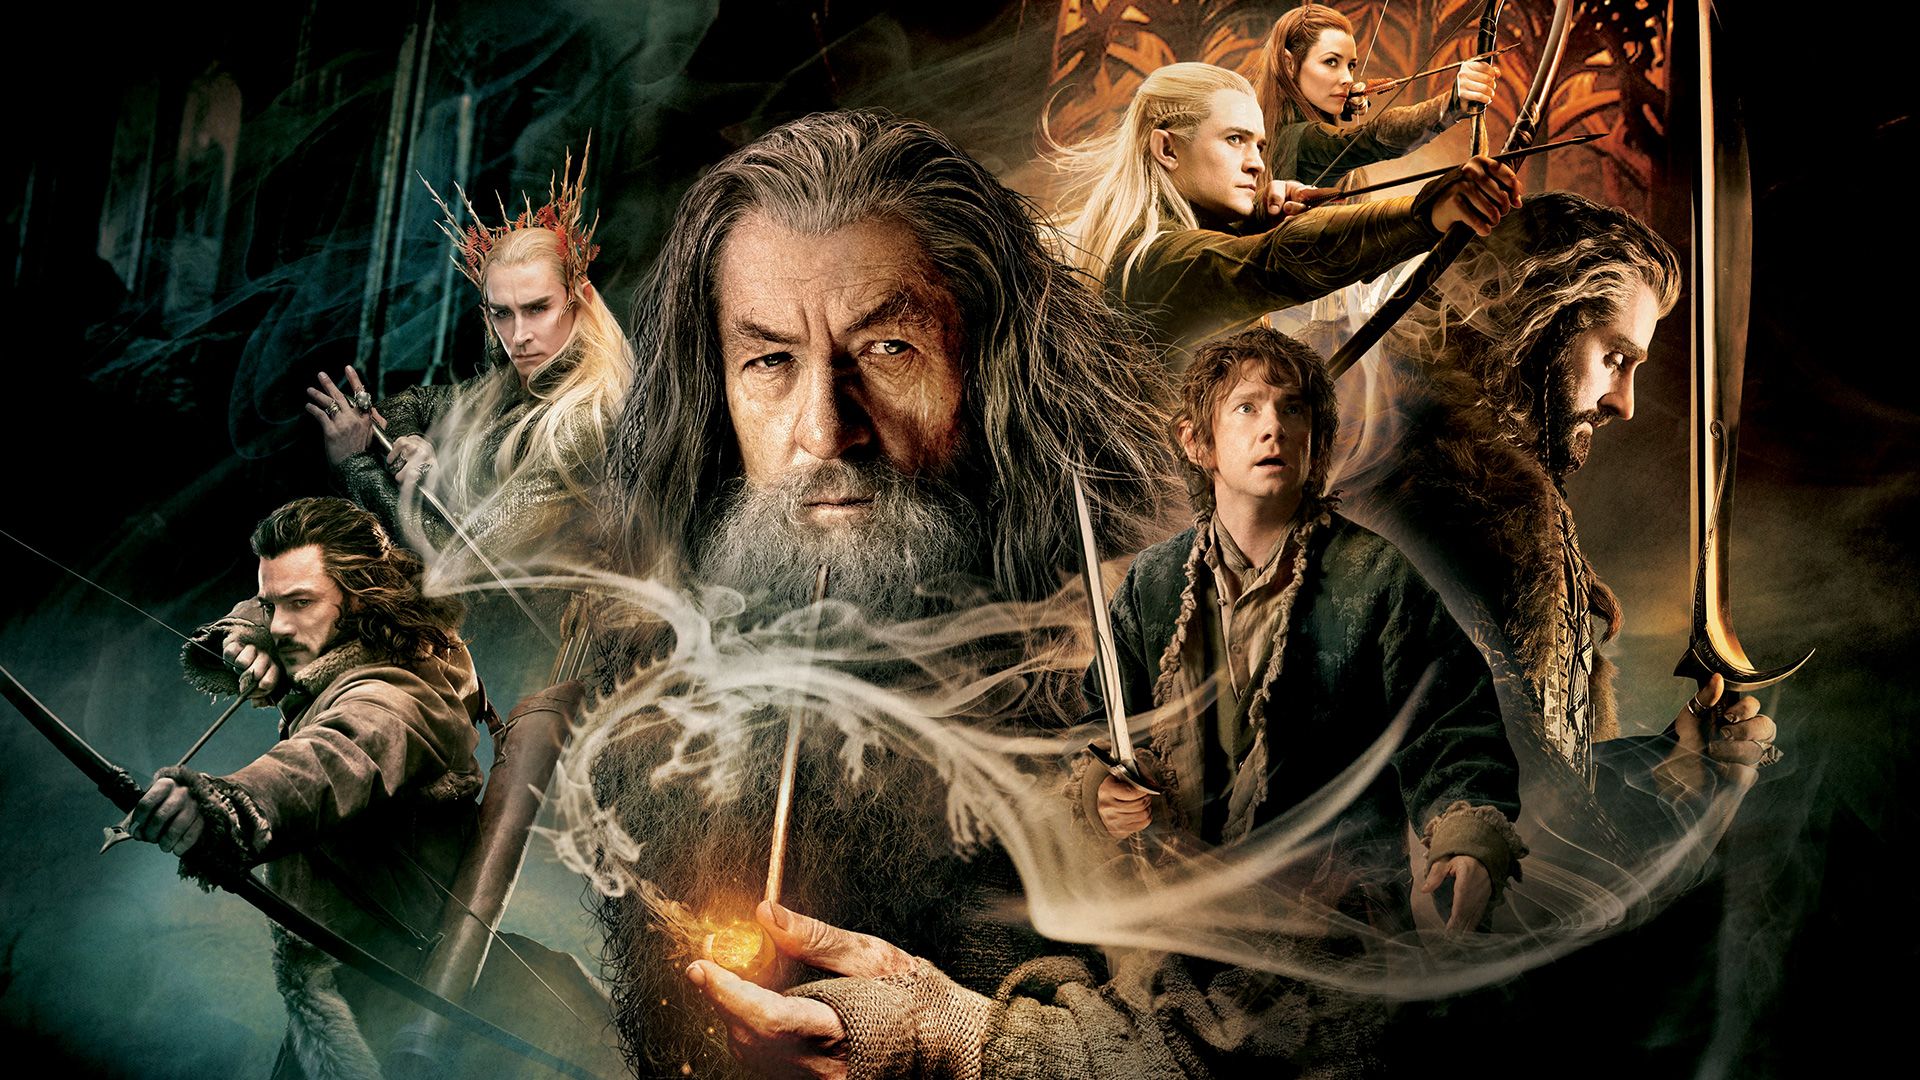 The Hobbit: The Desolation of Smaug background